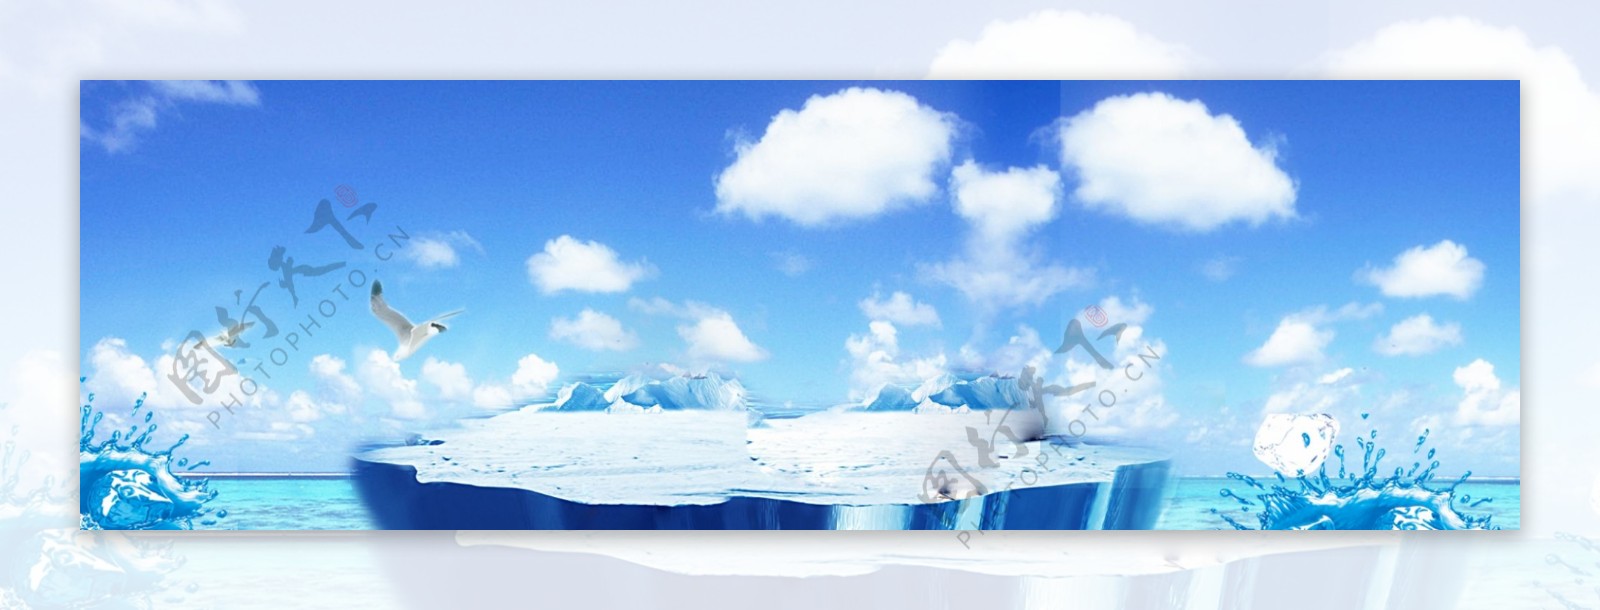 蓝色白云海洋冰块banner背景